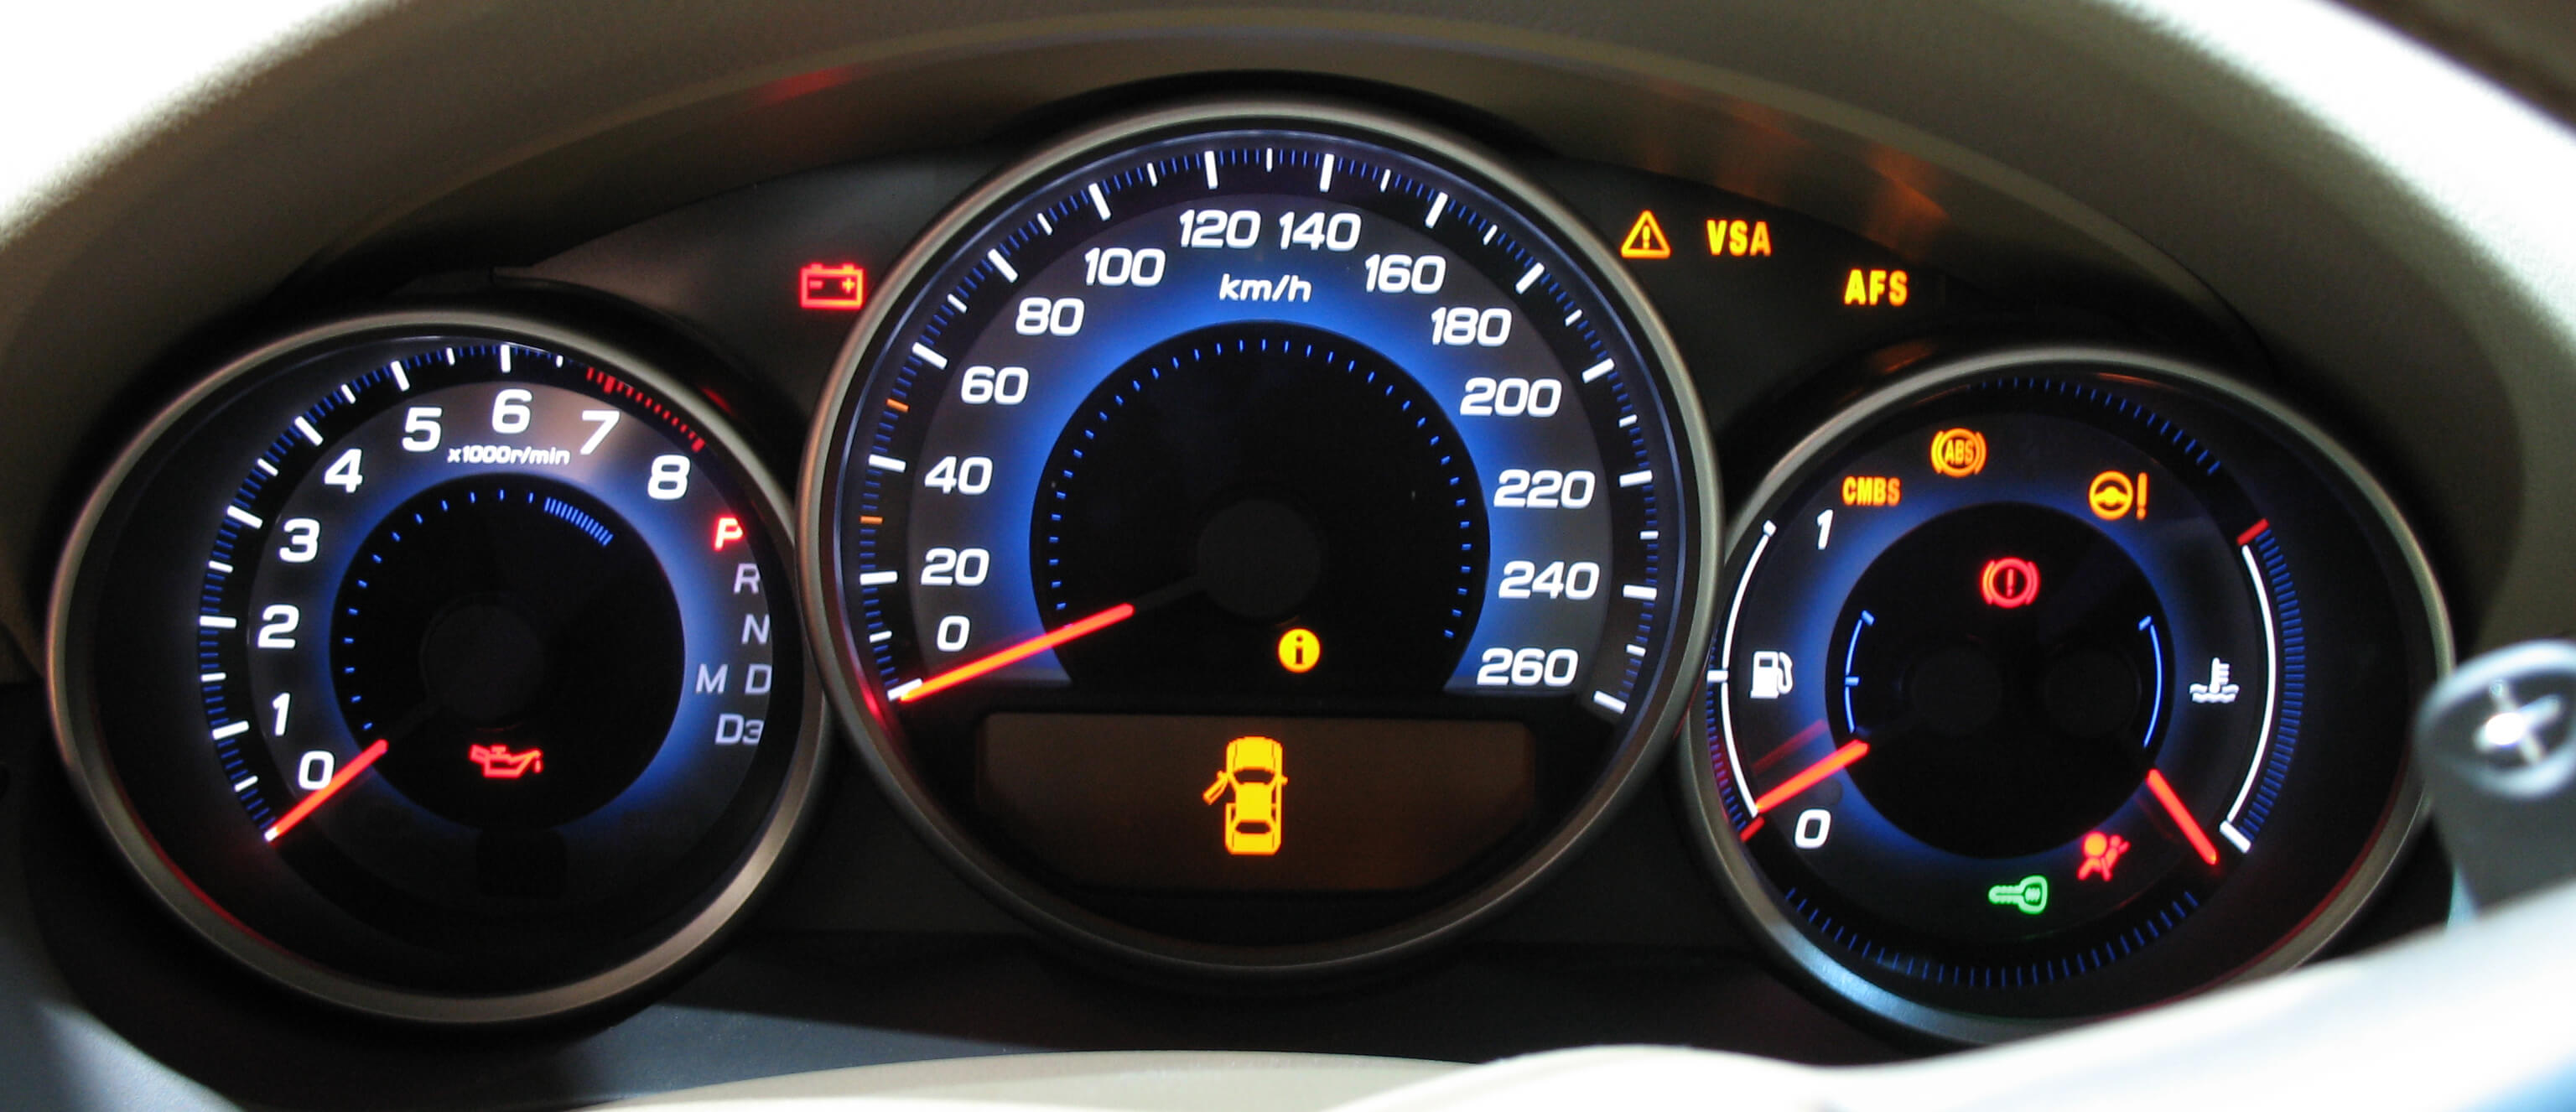 Como funciona o sensor de temperatura do seu carro?